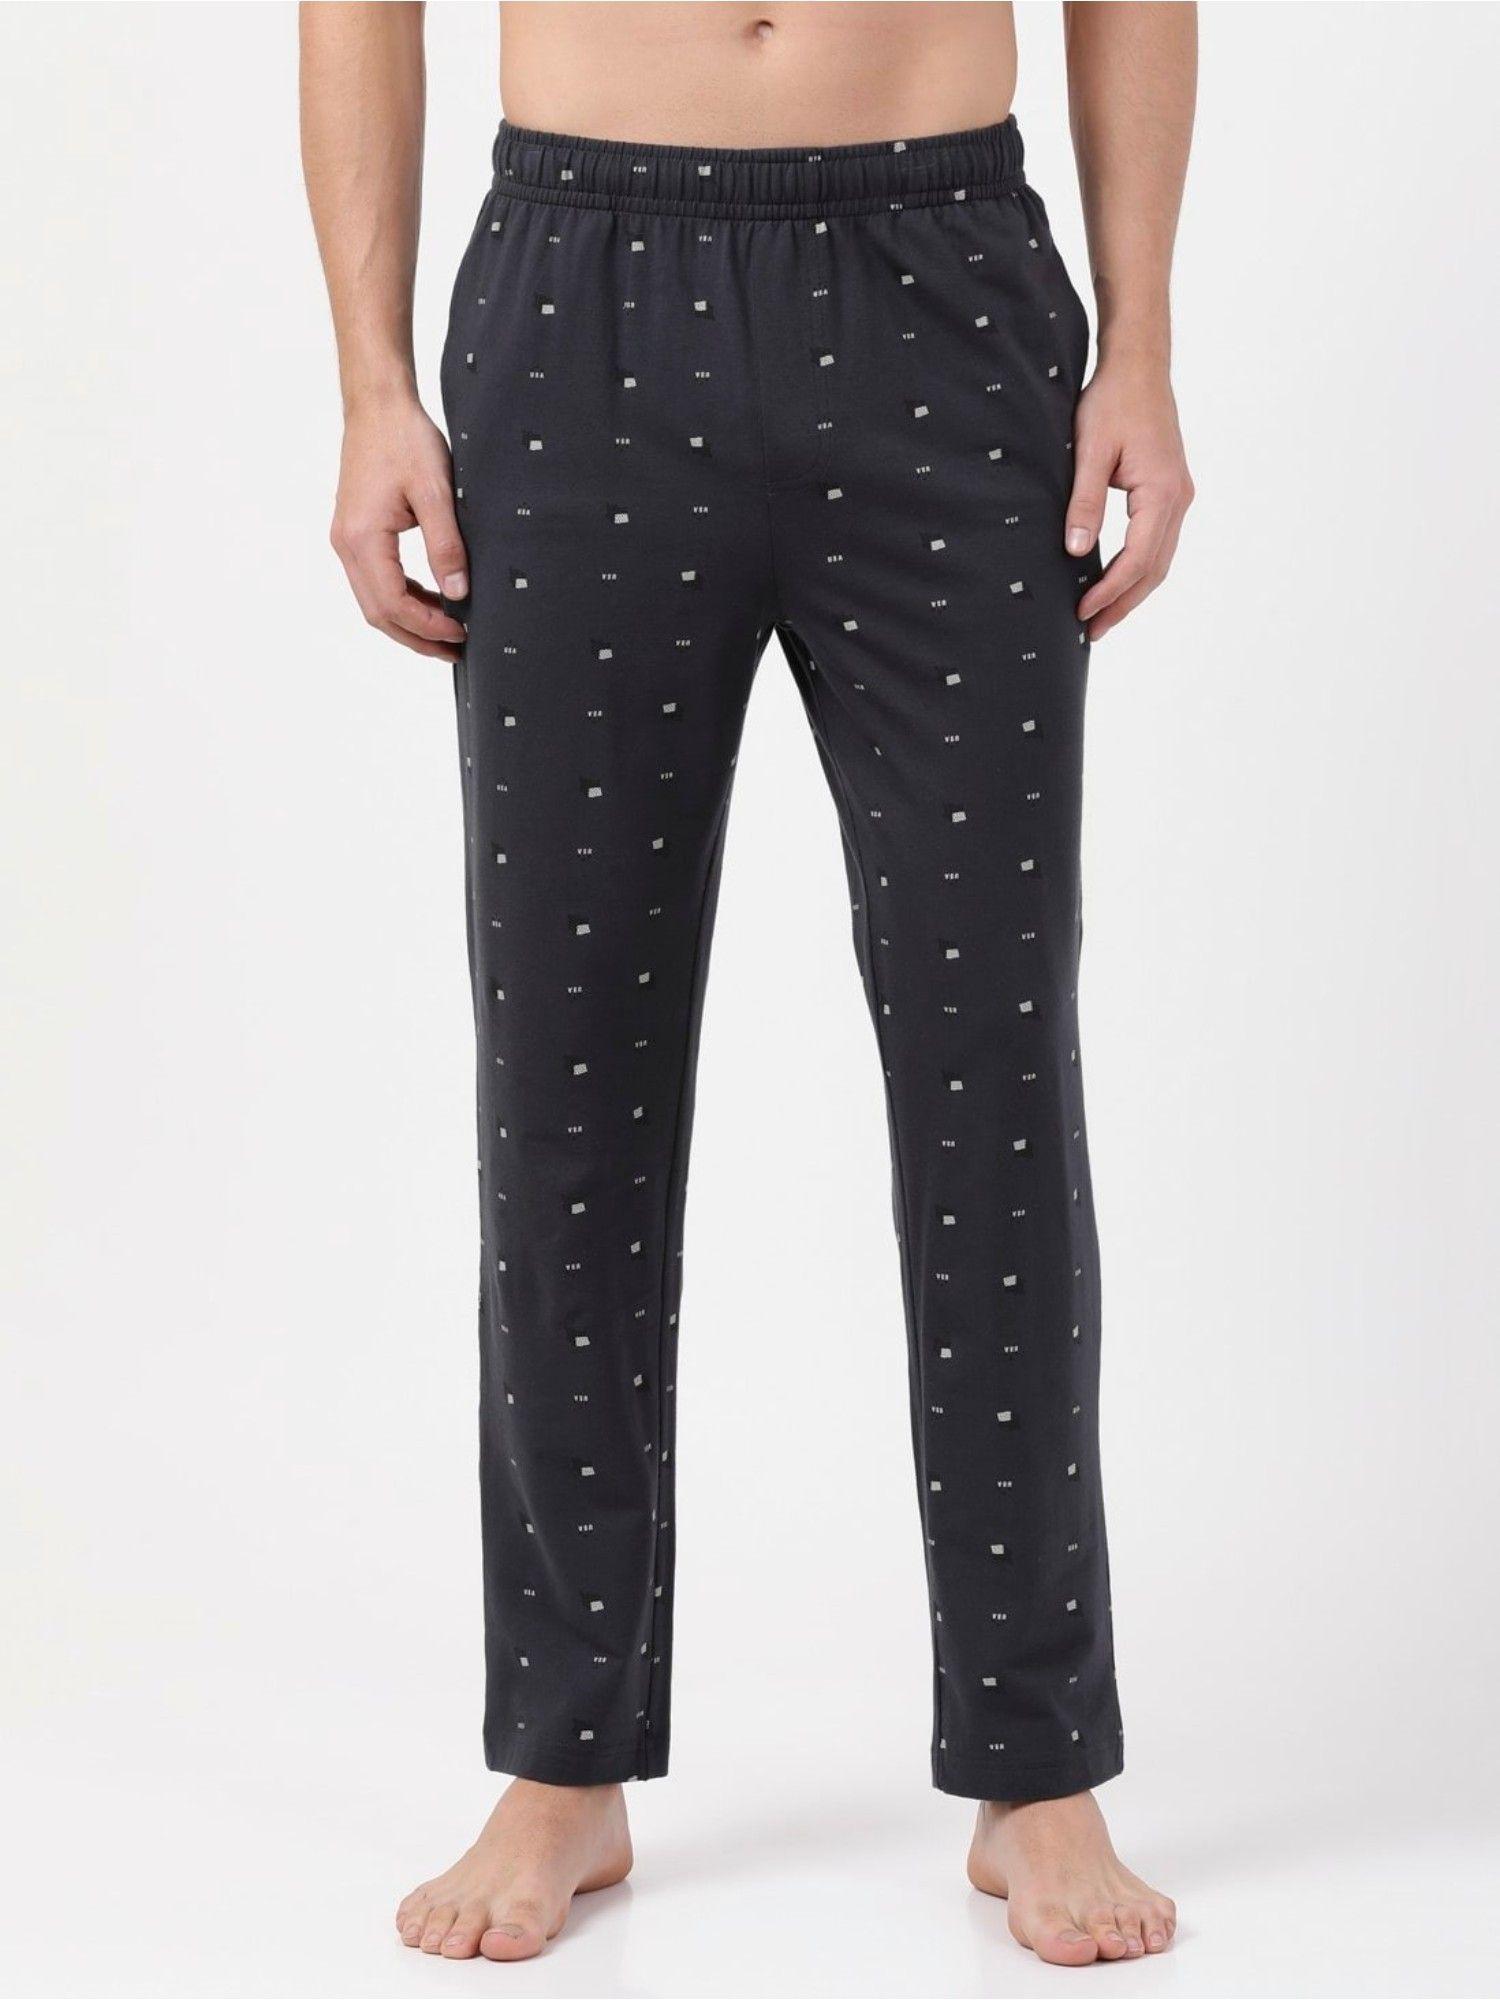 rm02 men cotton stretch regular fit printed pyjama with side pockets - black